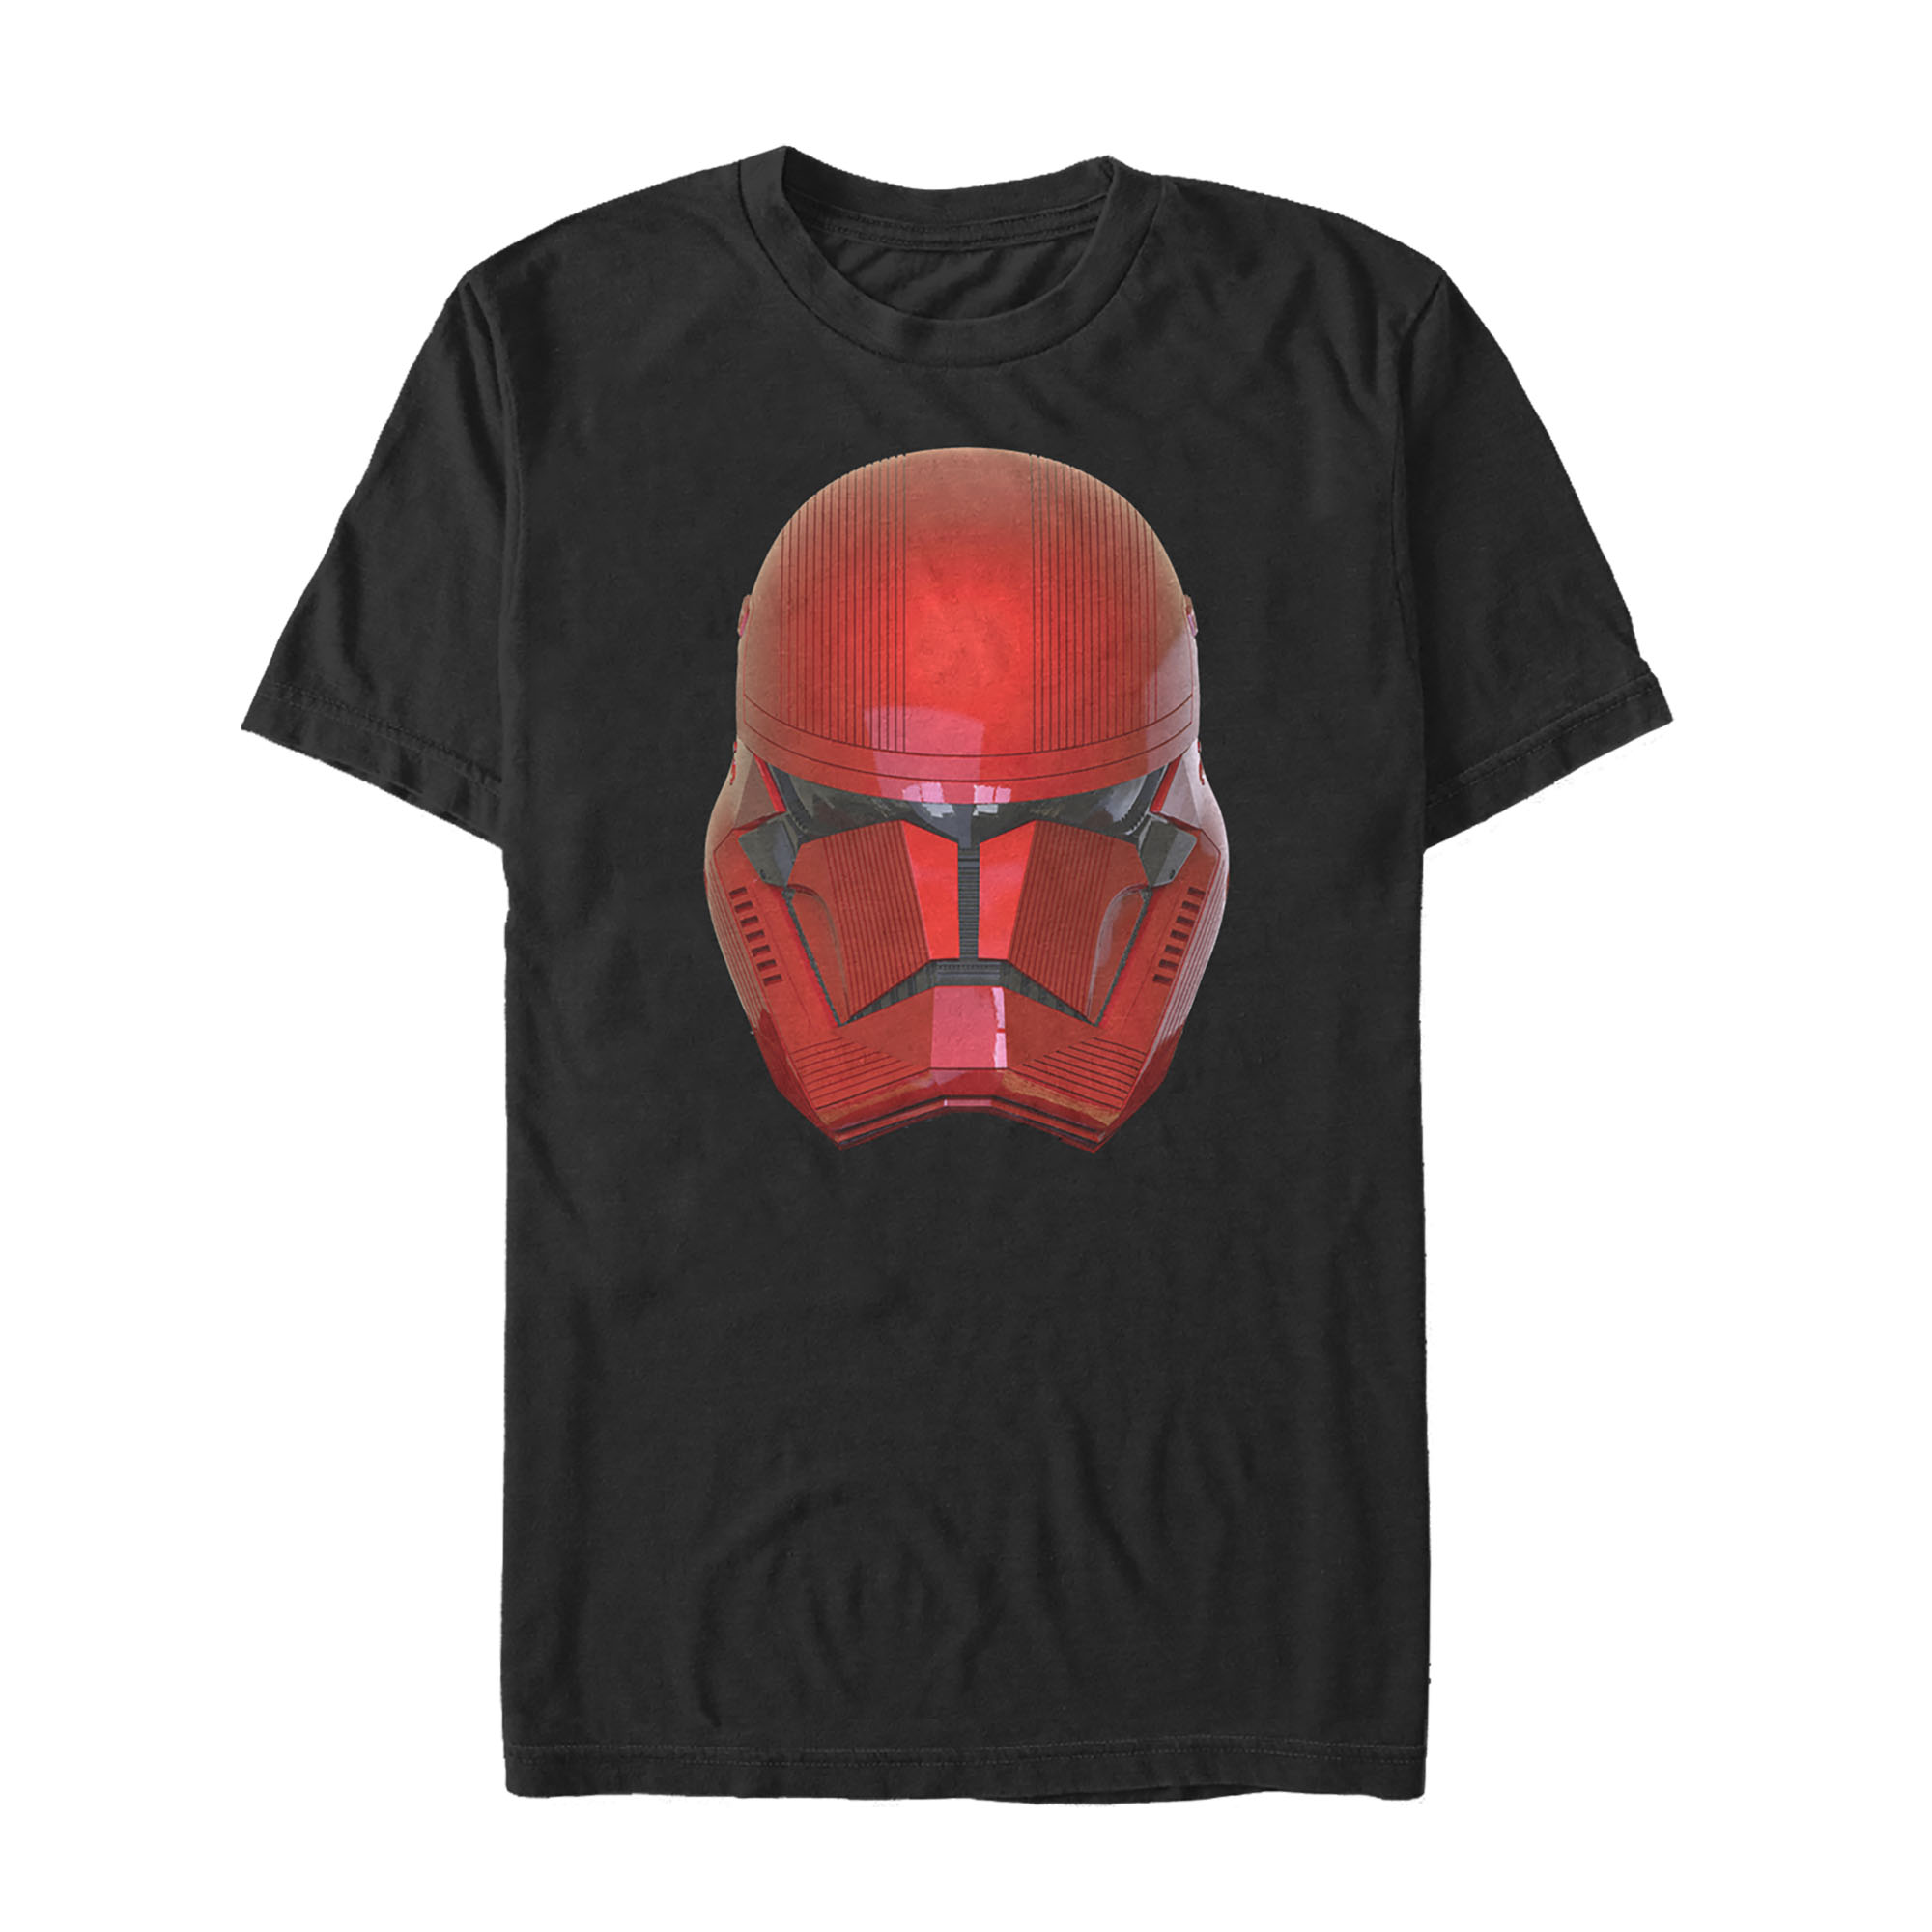 TROS FO Sith Trooper Helmet T-Shirt